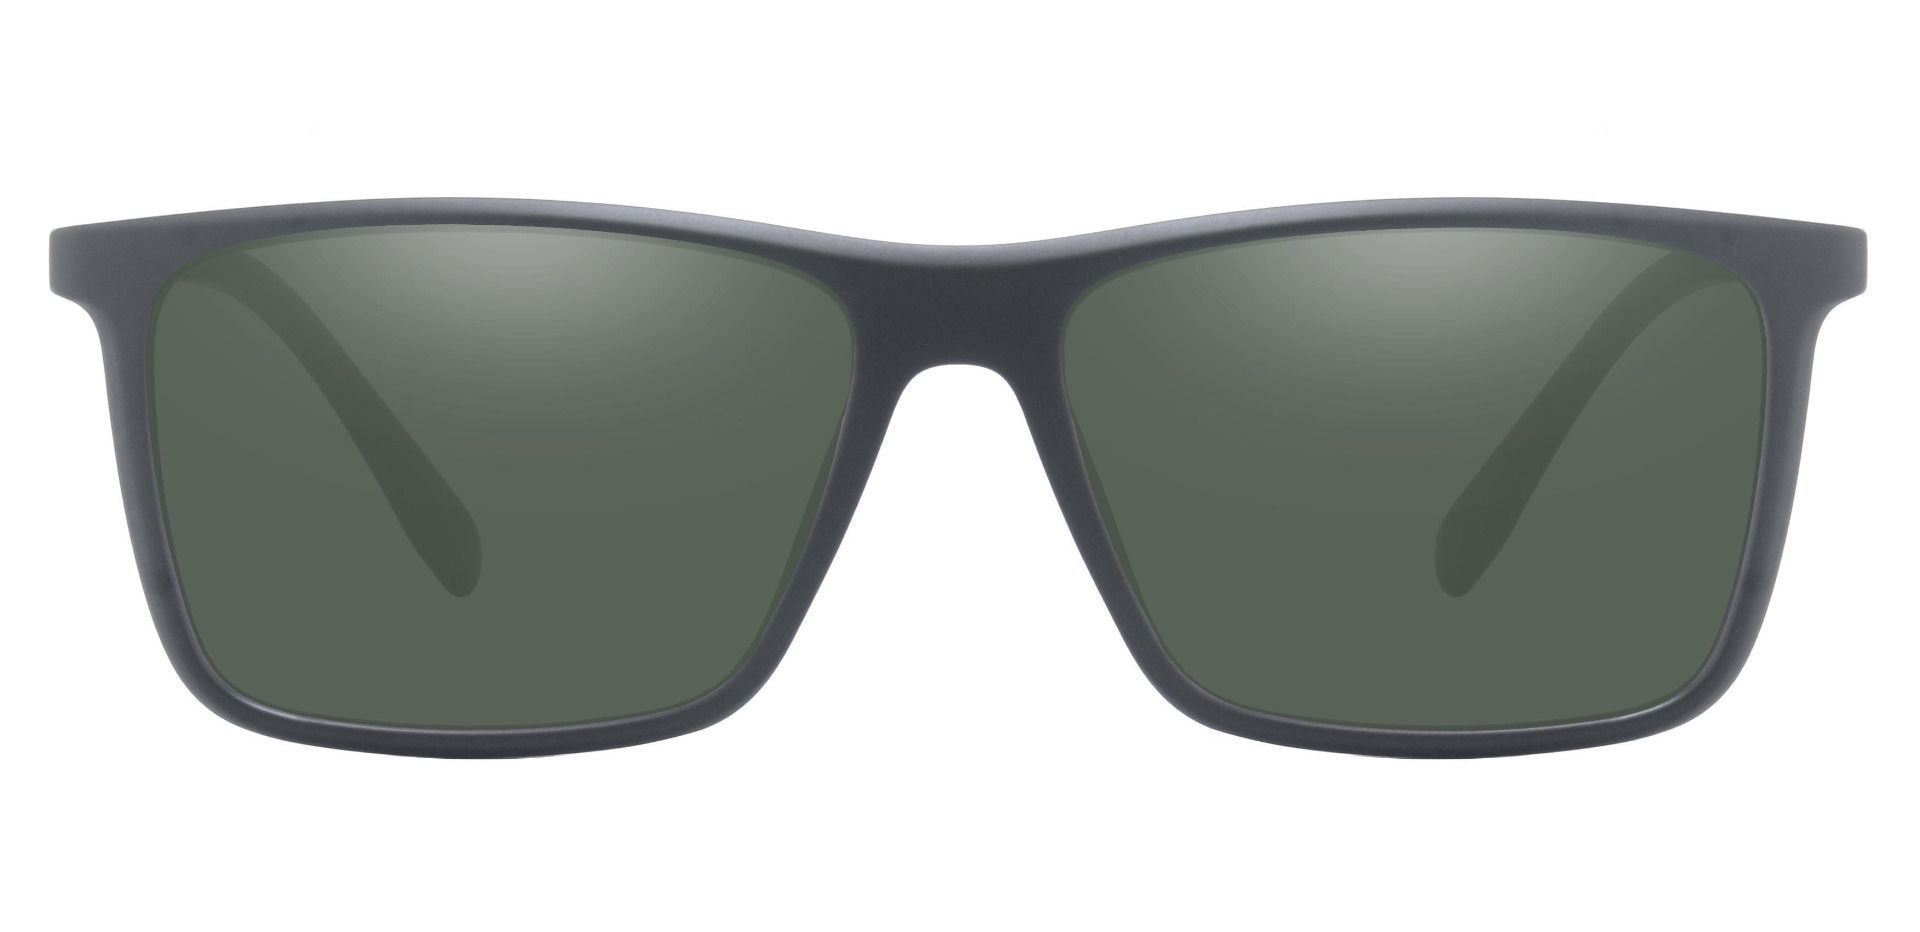 Cleveland Rectangle Prescription Sunglasses - Green Frame With Green Lenses